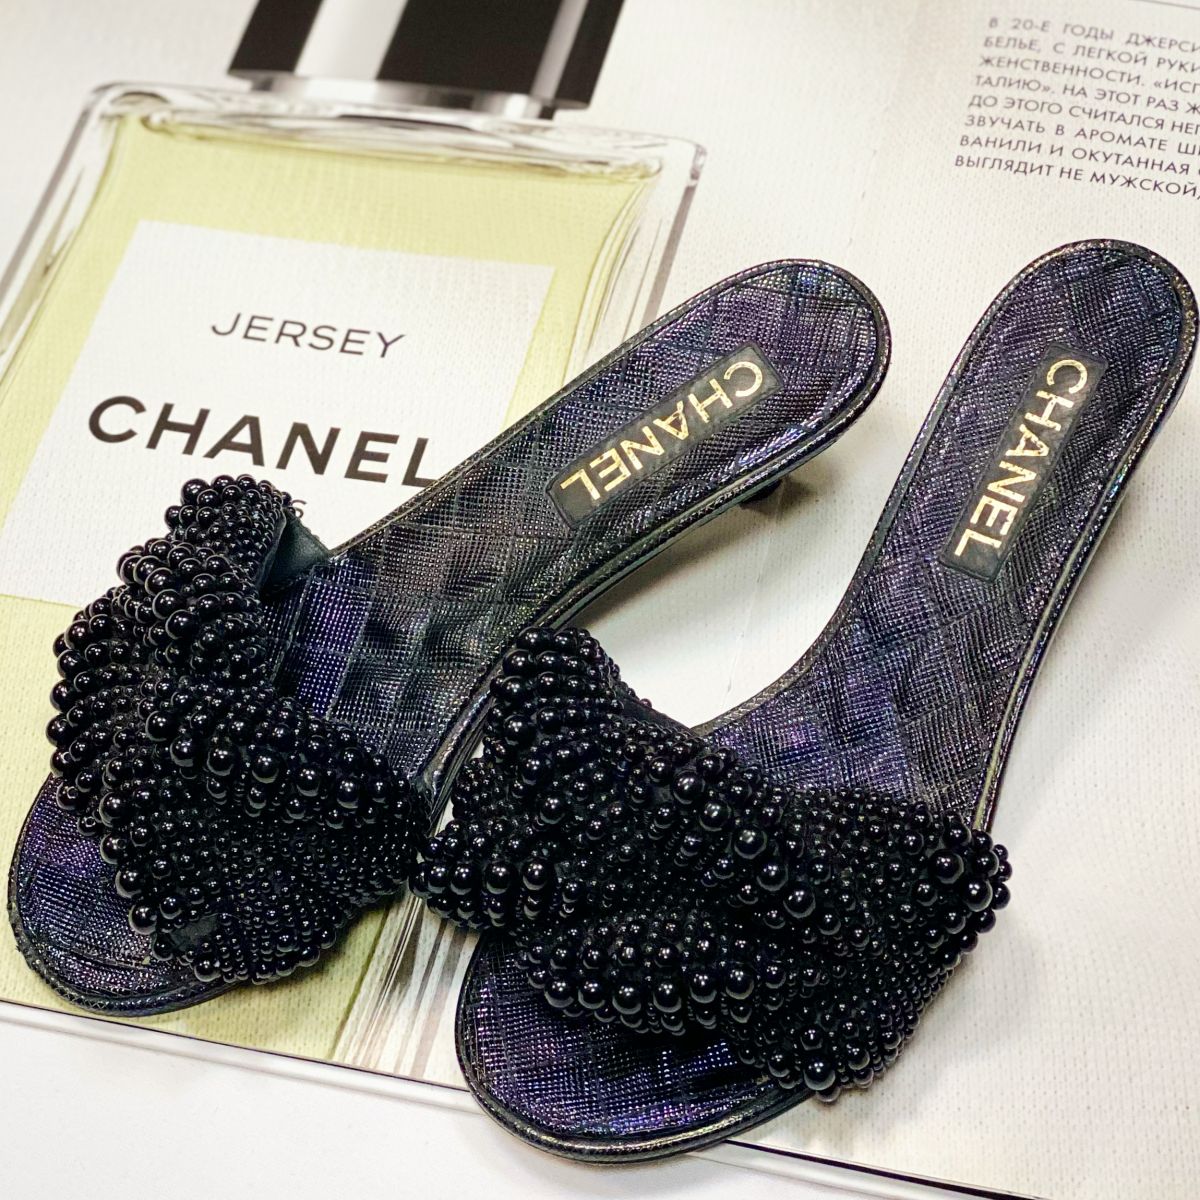 Сабо Chanel размер 39.5 цена 10 770 руб 